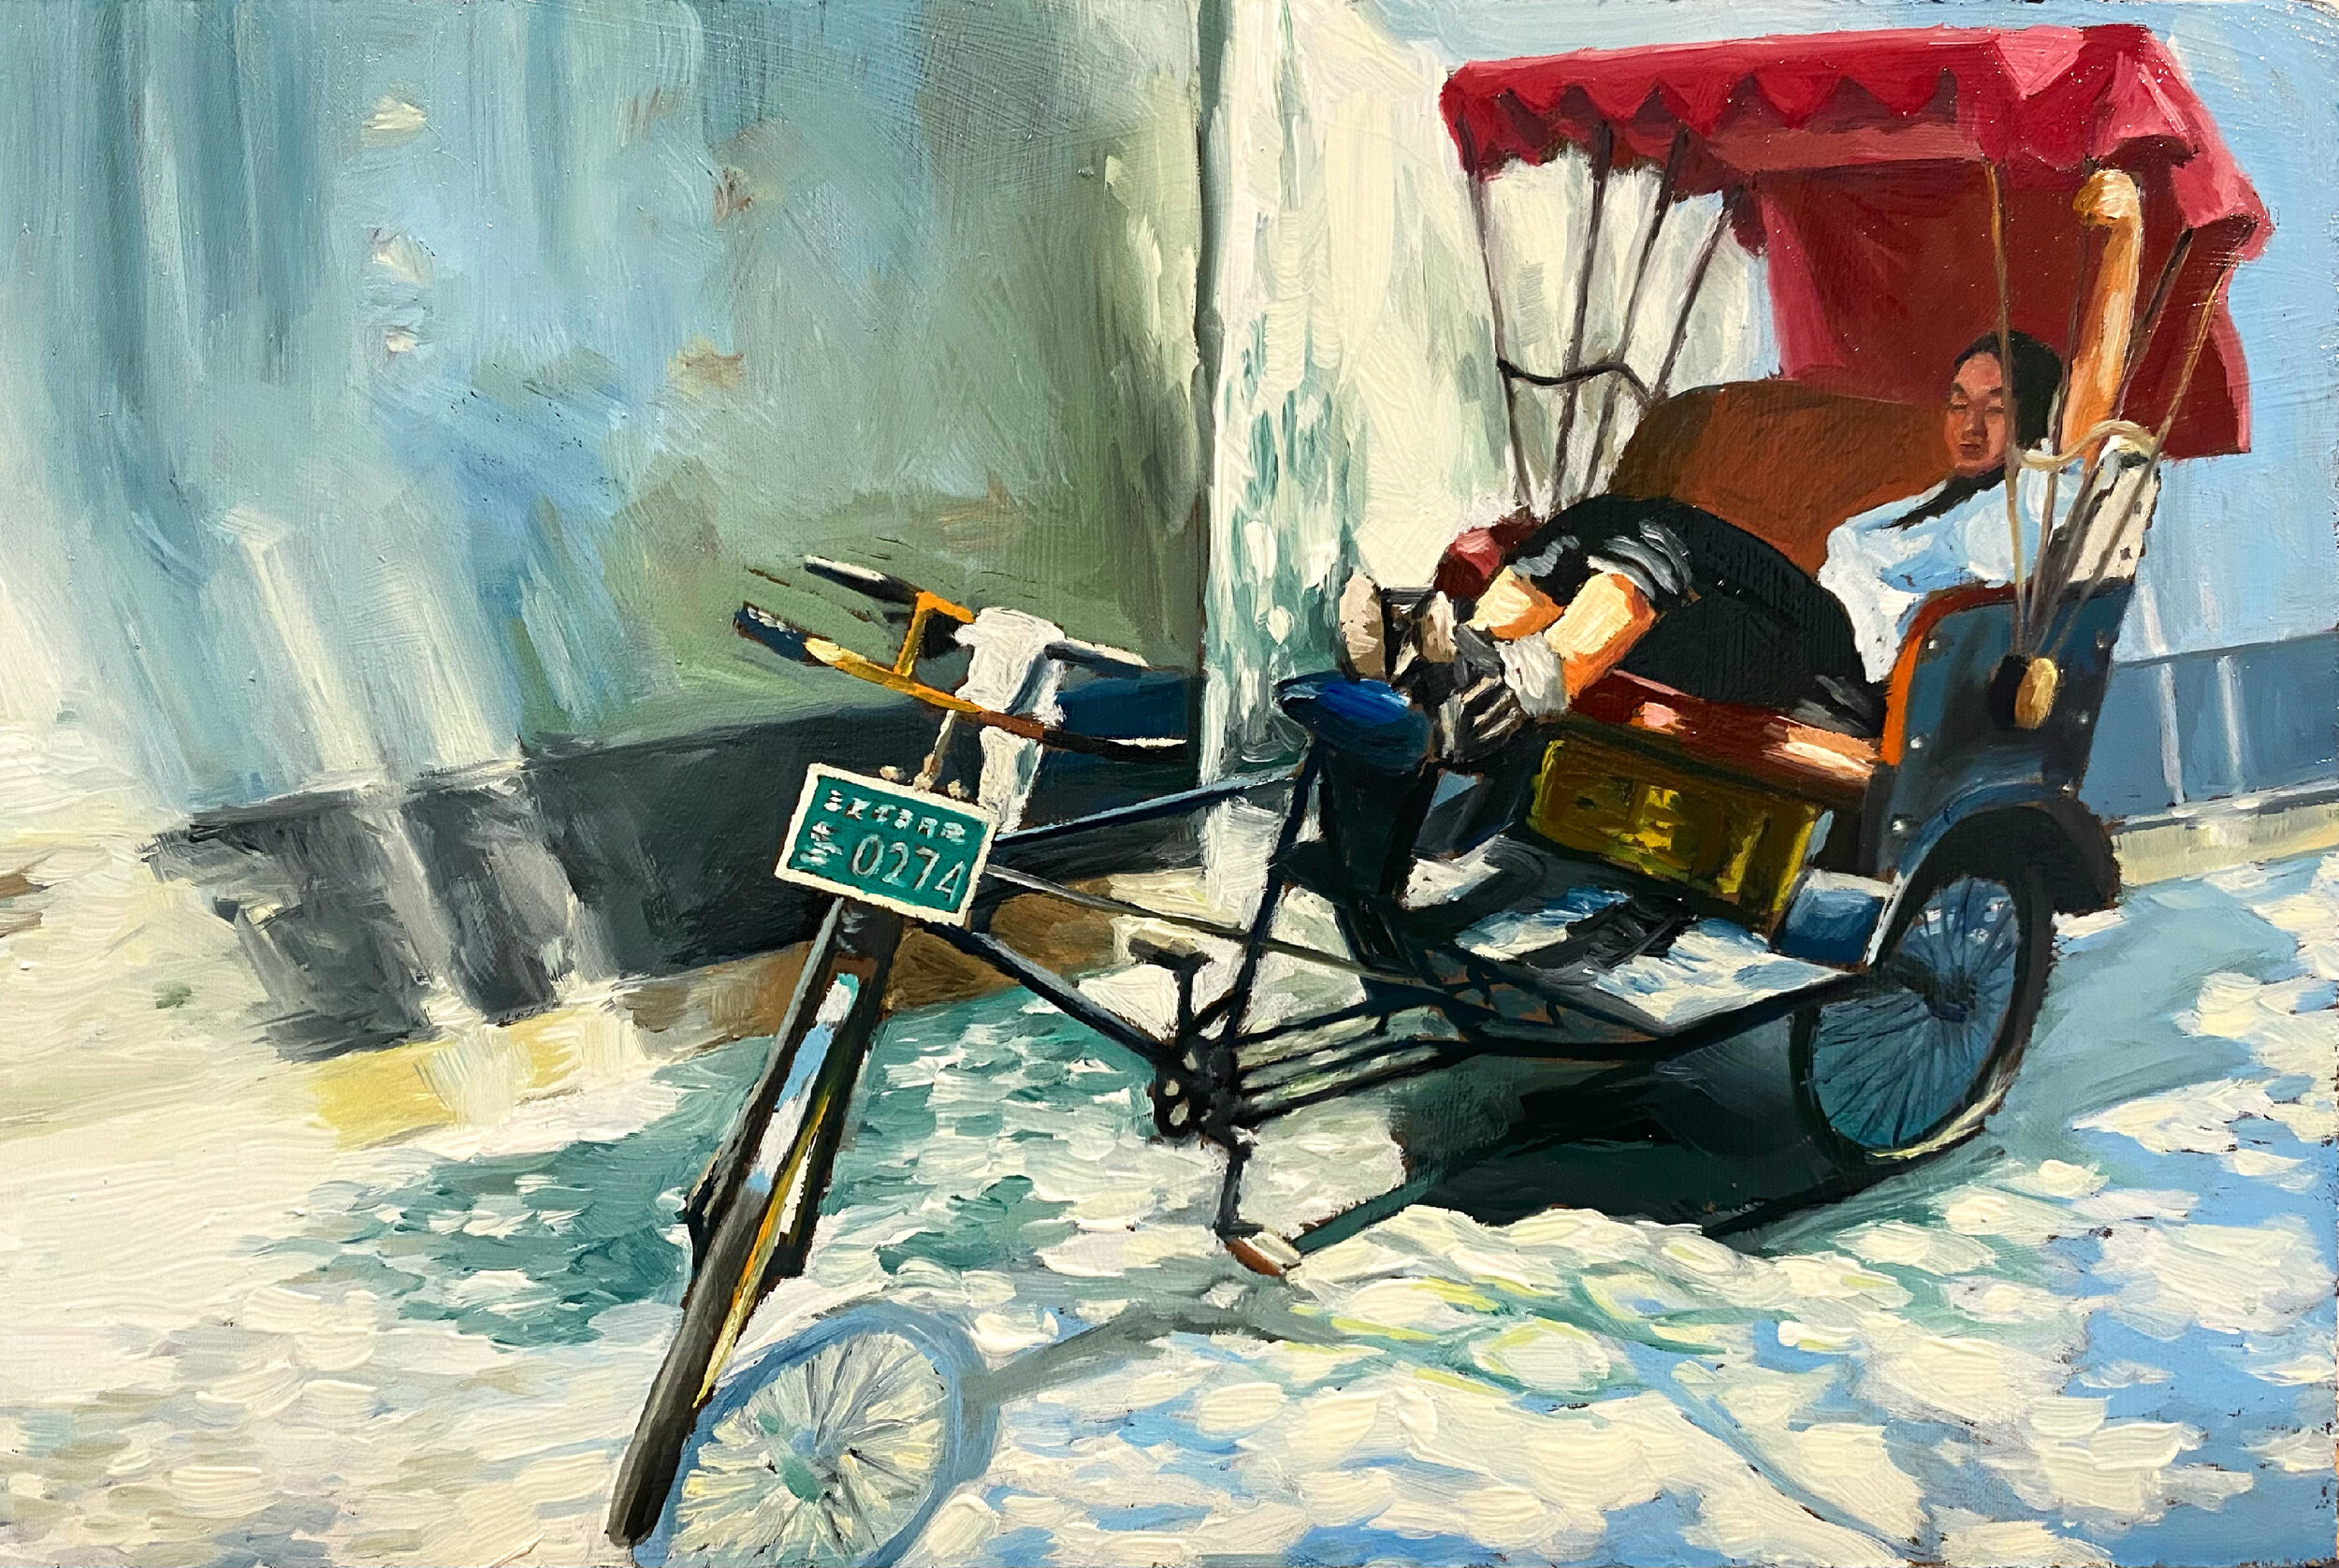 The rickshaw driver